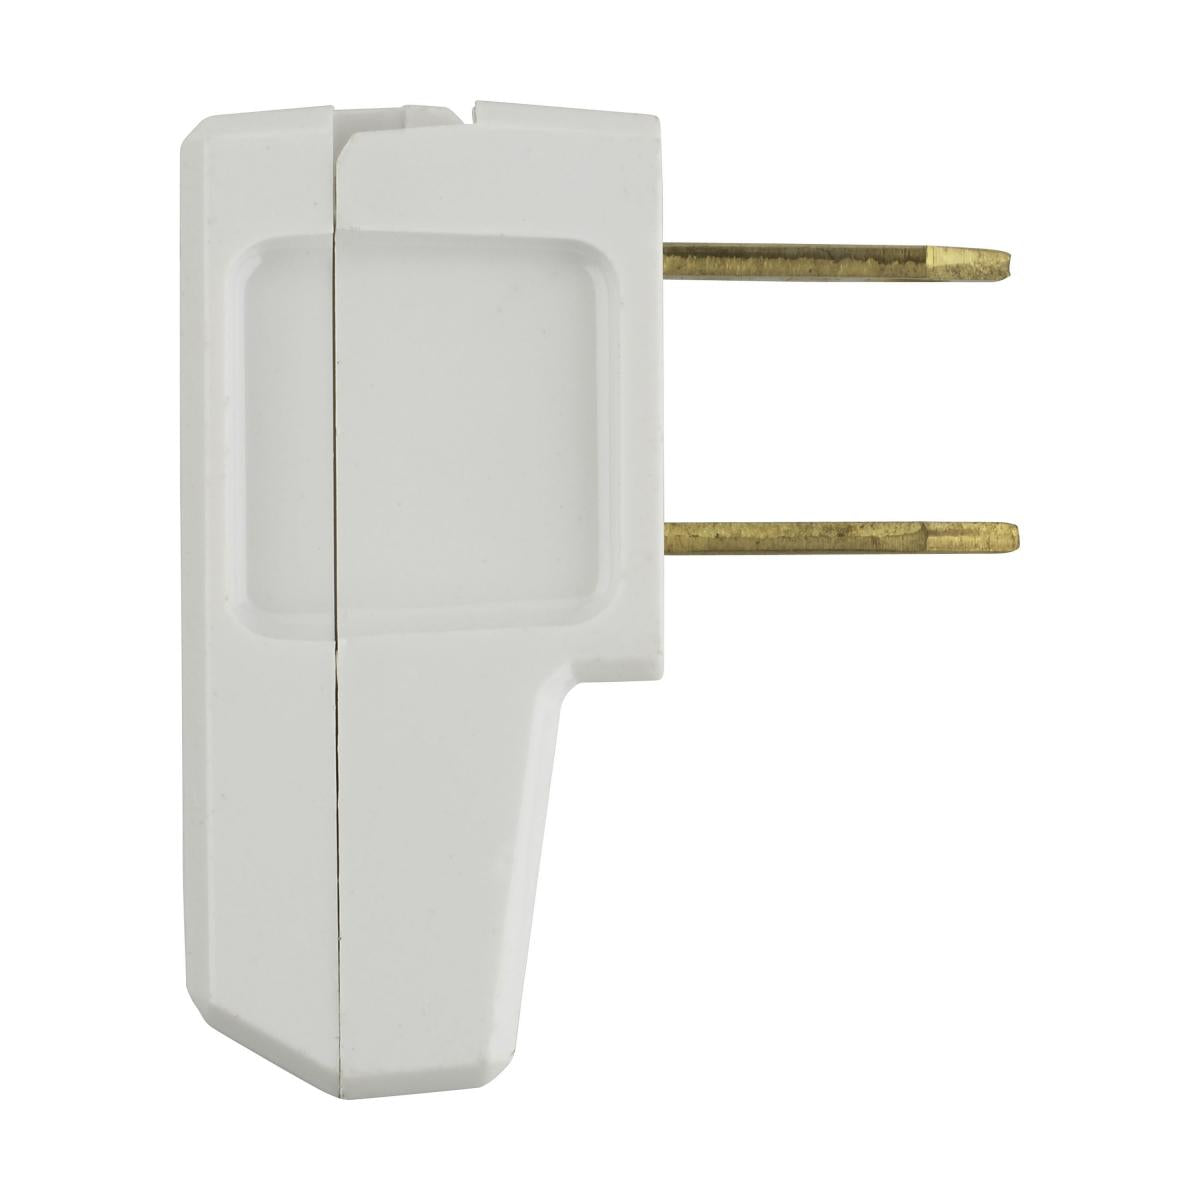 Satco 90-1083 Quick Connect Flat Plug White Finish Non Polarized 18/2-SPT-2 And 16/2 SPT-2 15A 125V